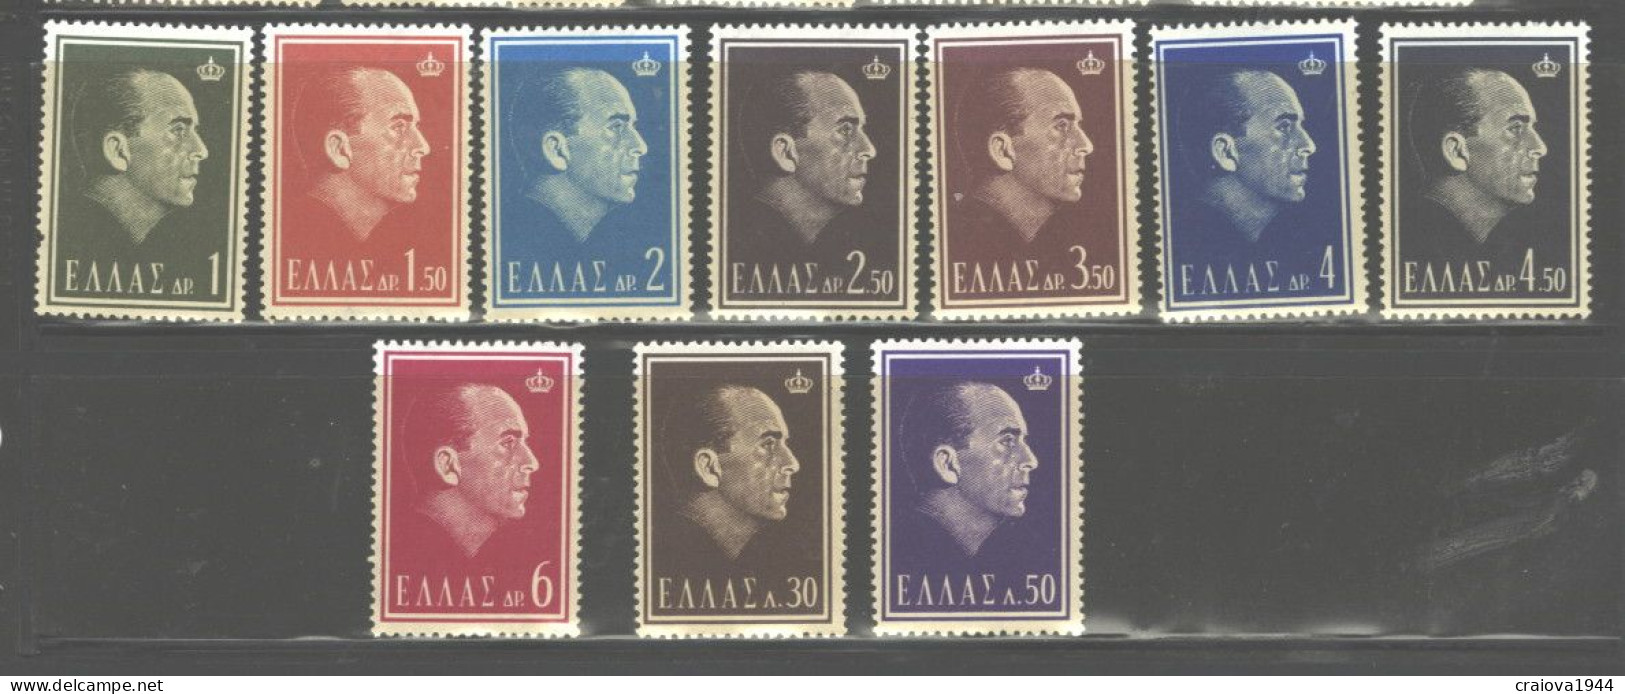 GREECE 1964 KING PAUL II #778 - 787 MNH - Nuevos